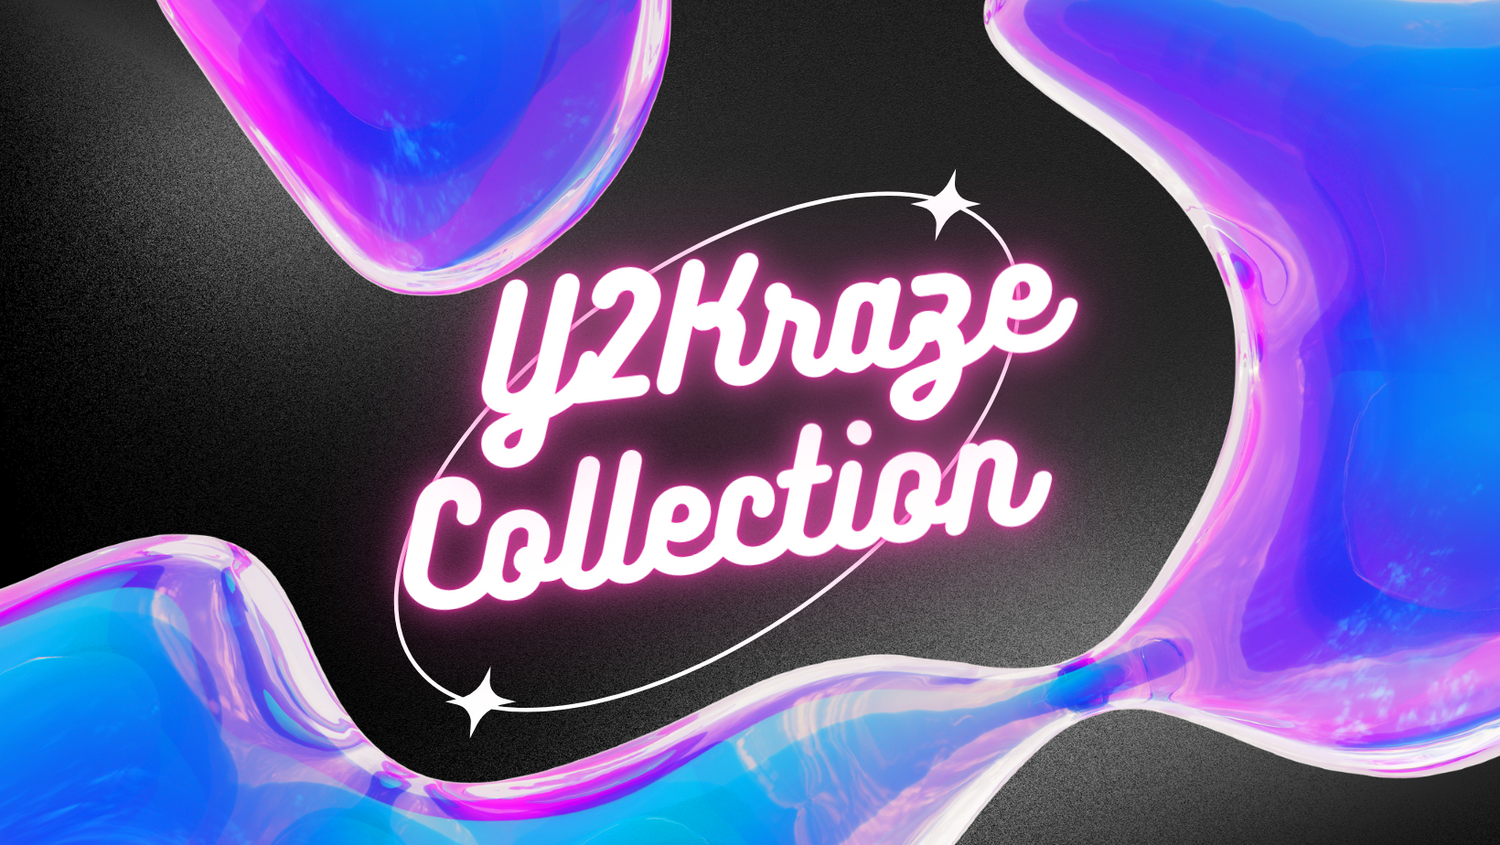 Y2Kraze Collection